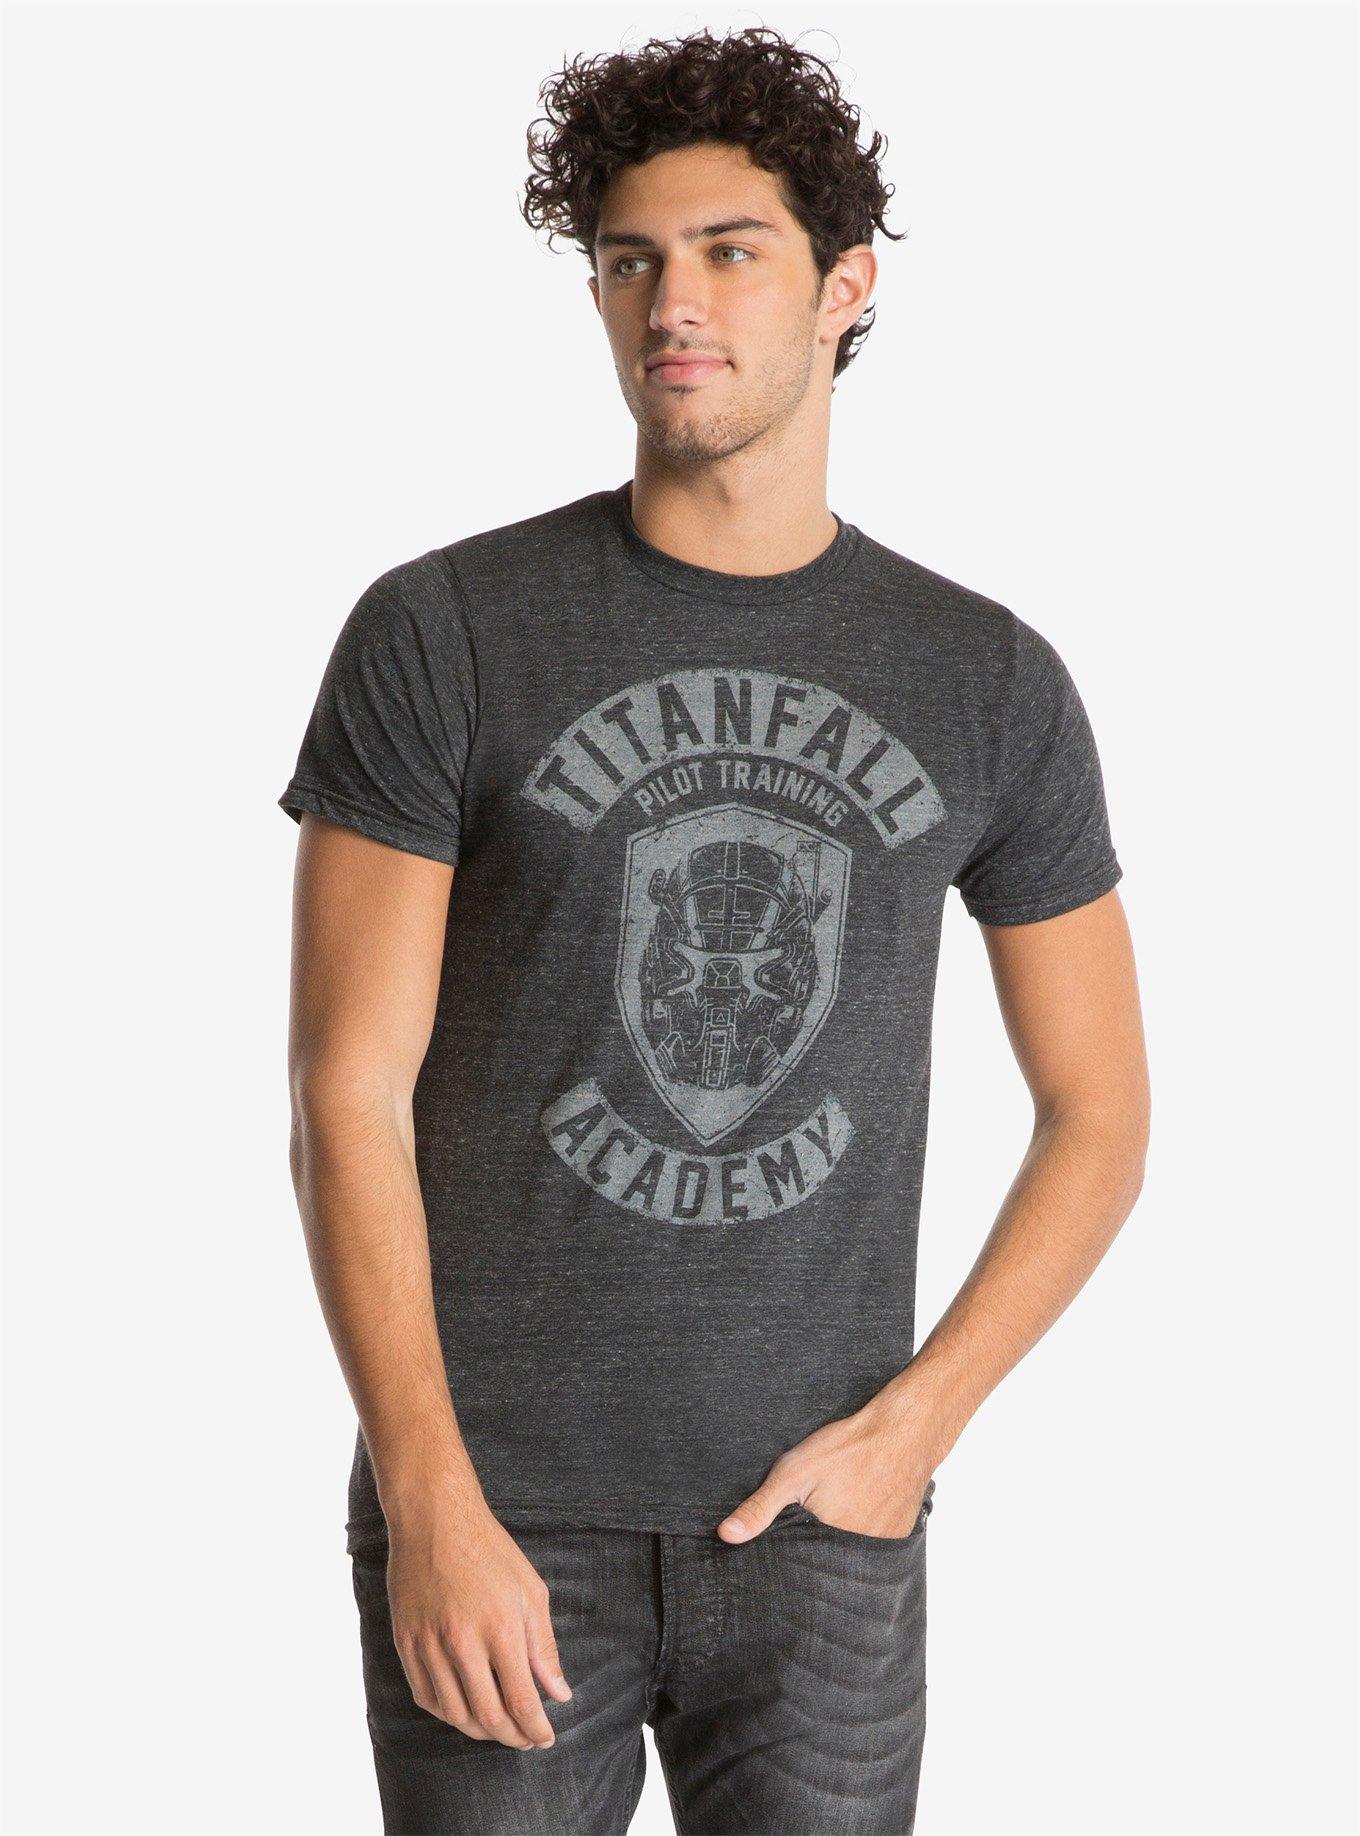 Titanfall Training Academy T-Shirt, BLACK, hi-res